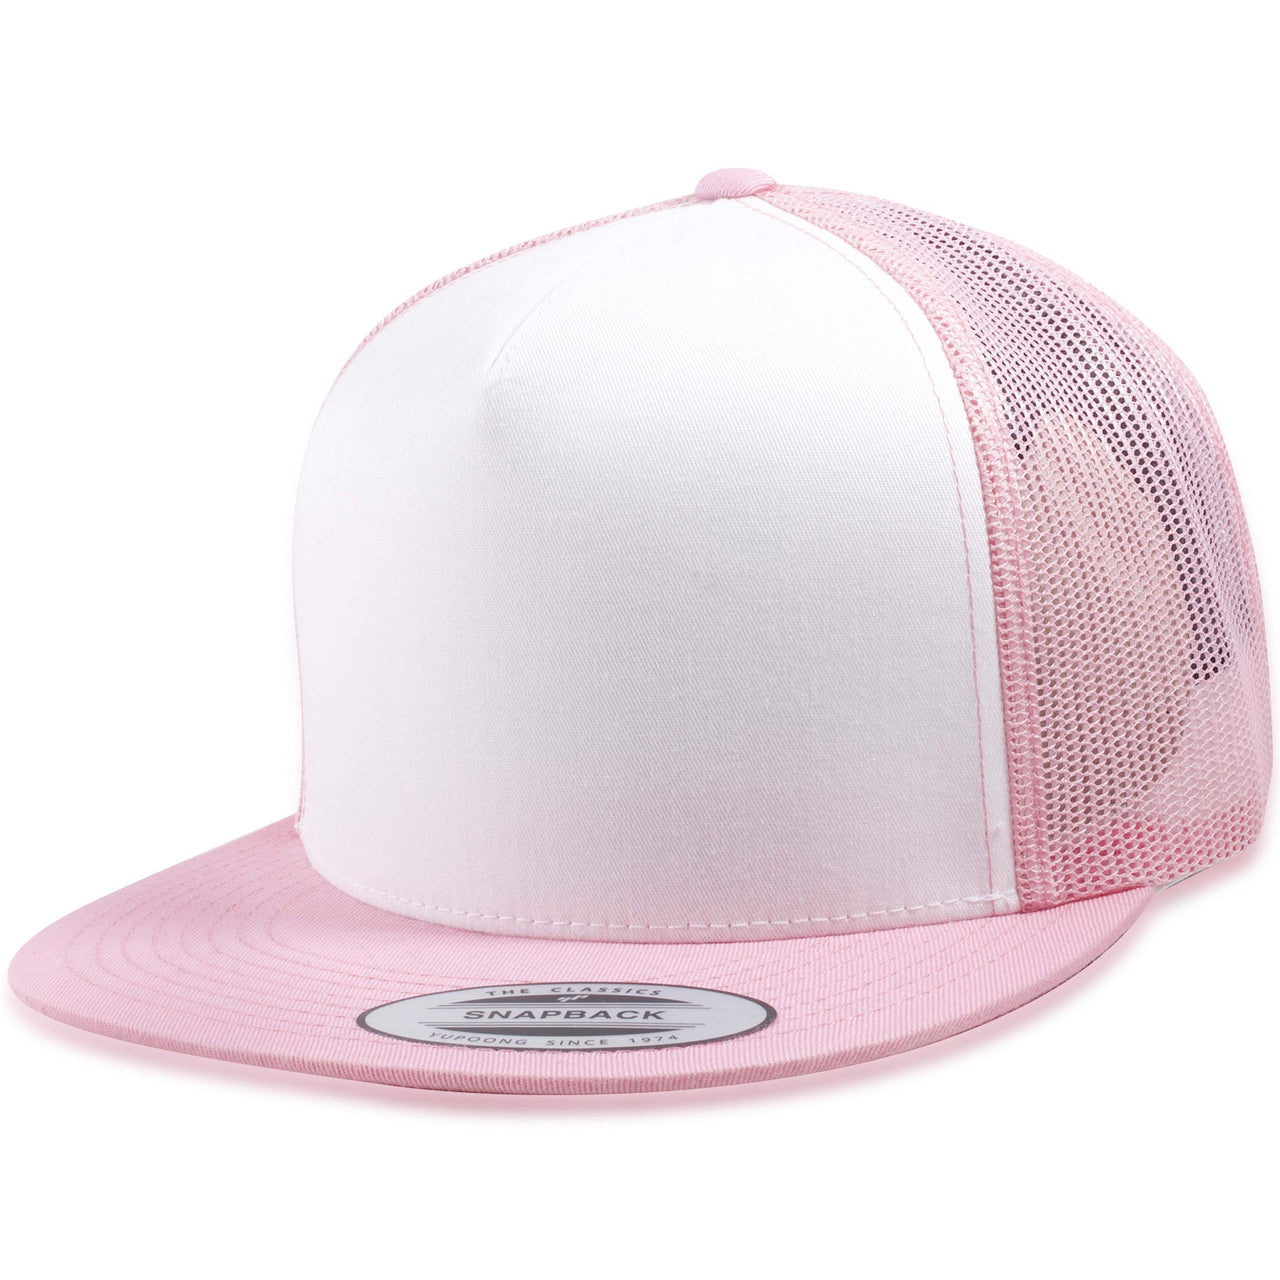 White on Pink Mesh-Back Adjustable Snapback Trucker Hat